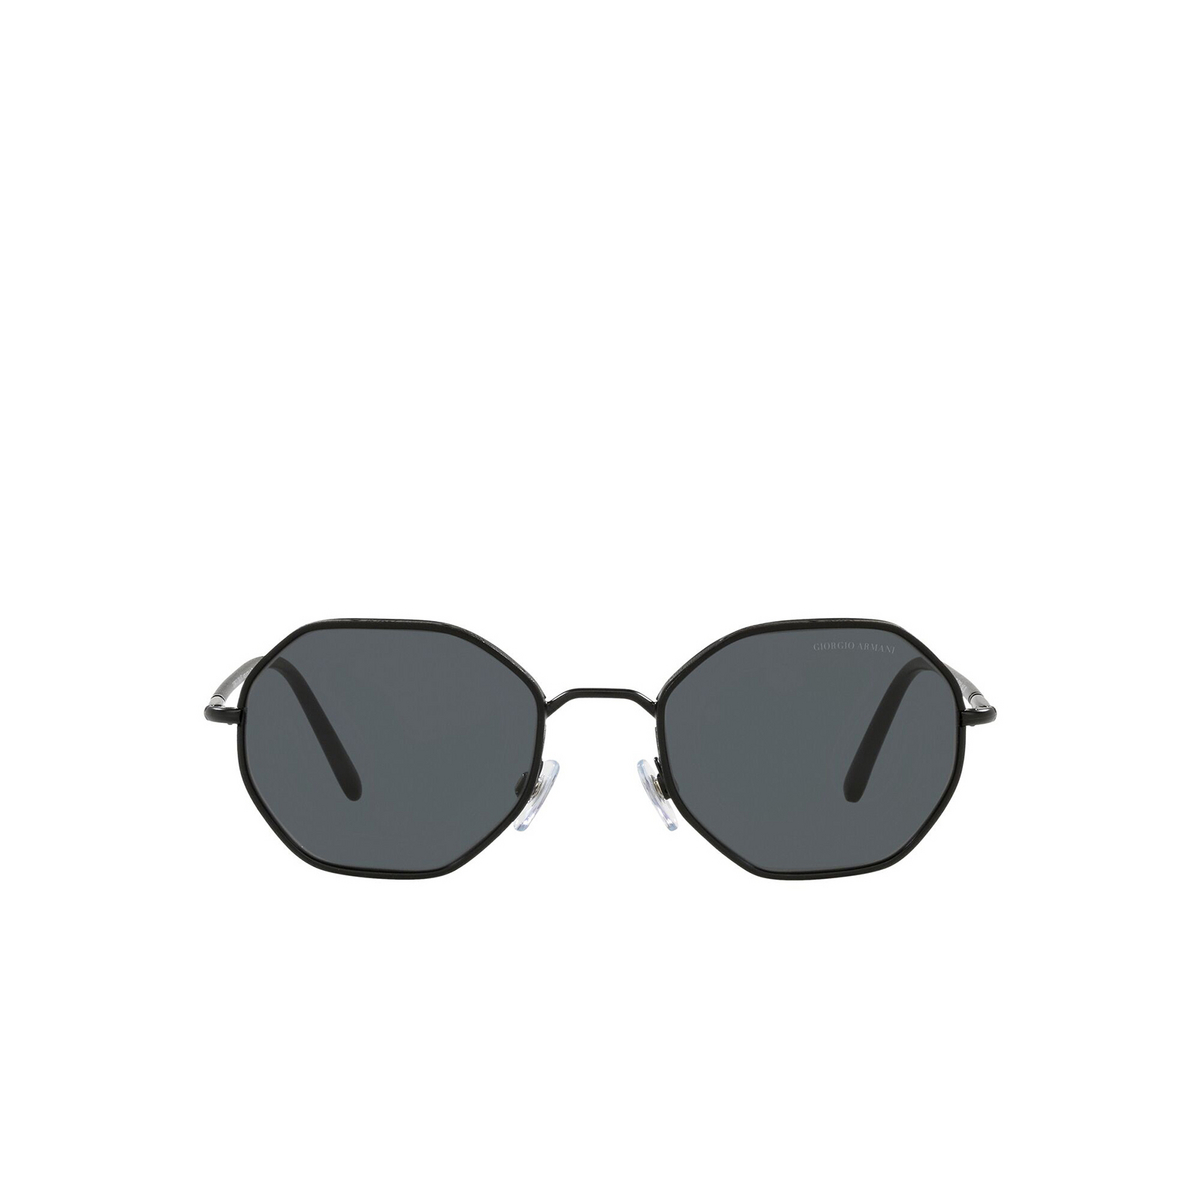 Giorgio Armani® Irregular Sunglasses: AR6112J color Matte Black 300187 - front view.